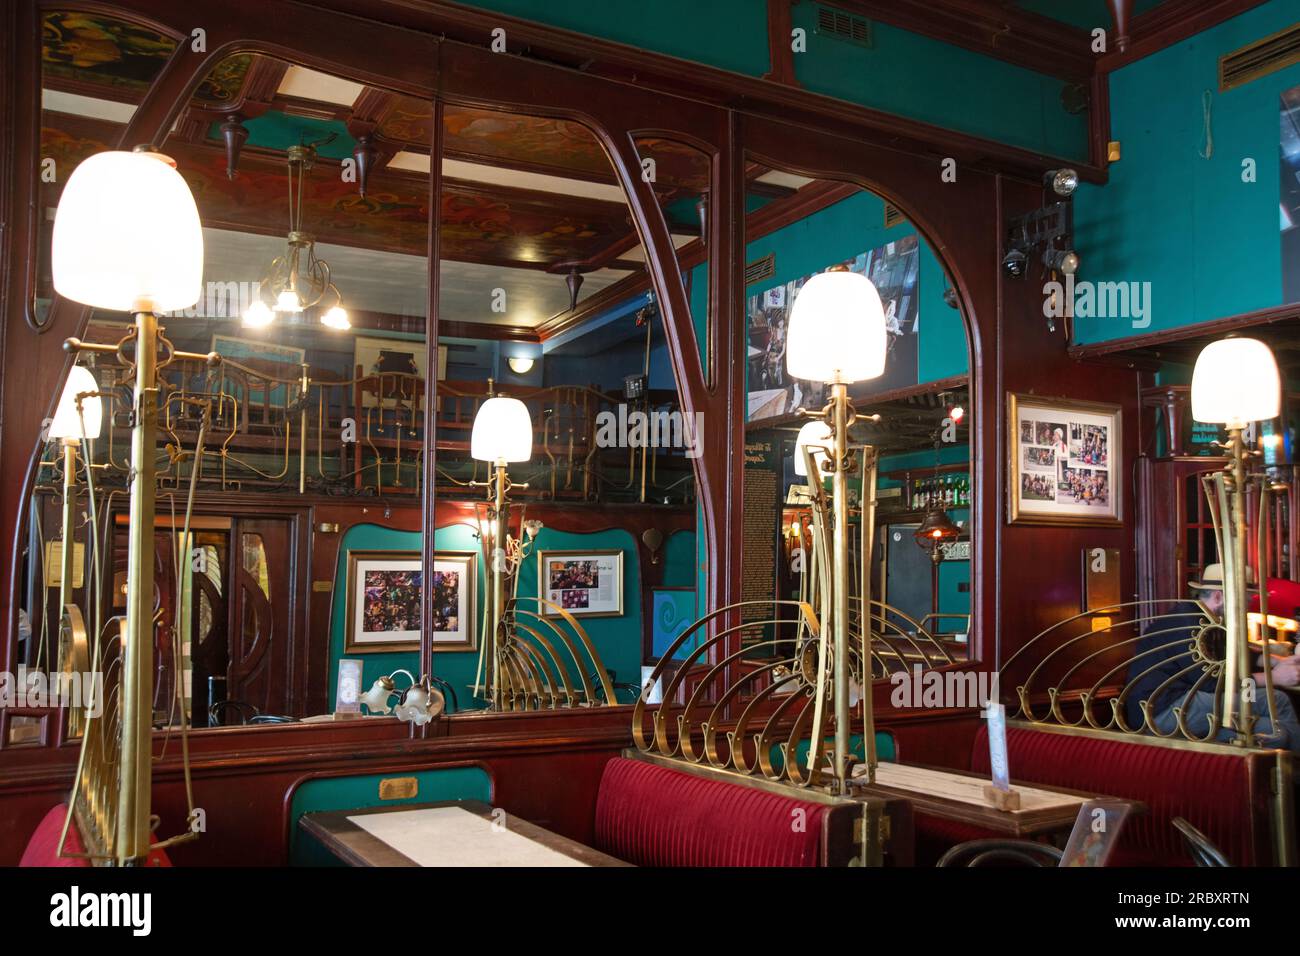 Interior of Kalambur, Cafe & Bar, Wroclaw, Poland Stock Photo